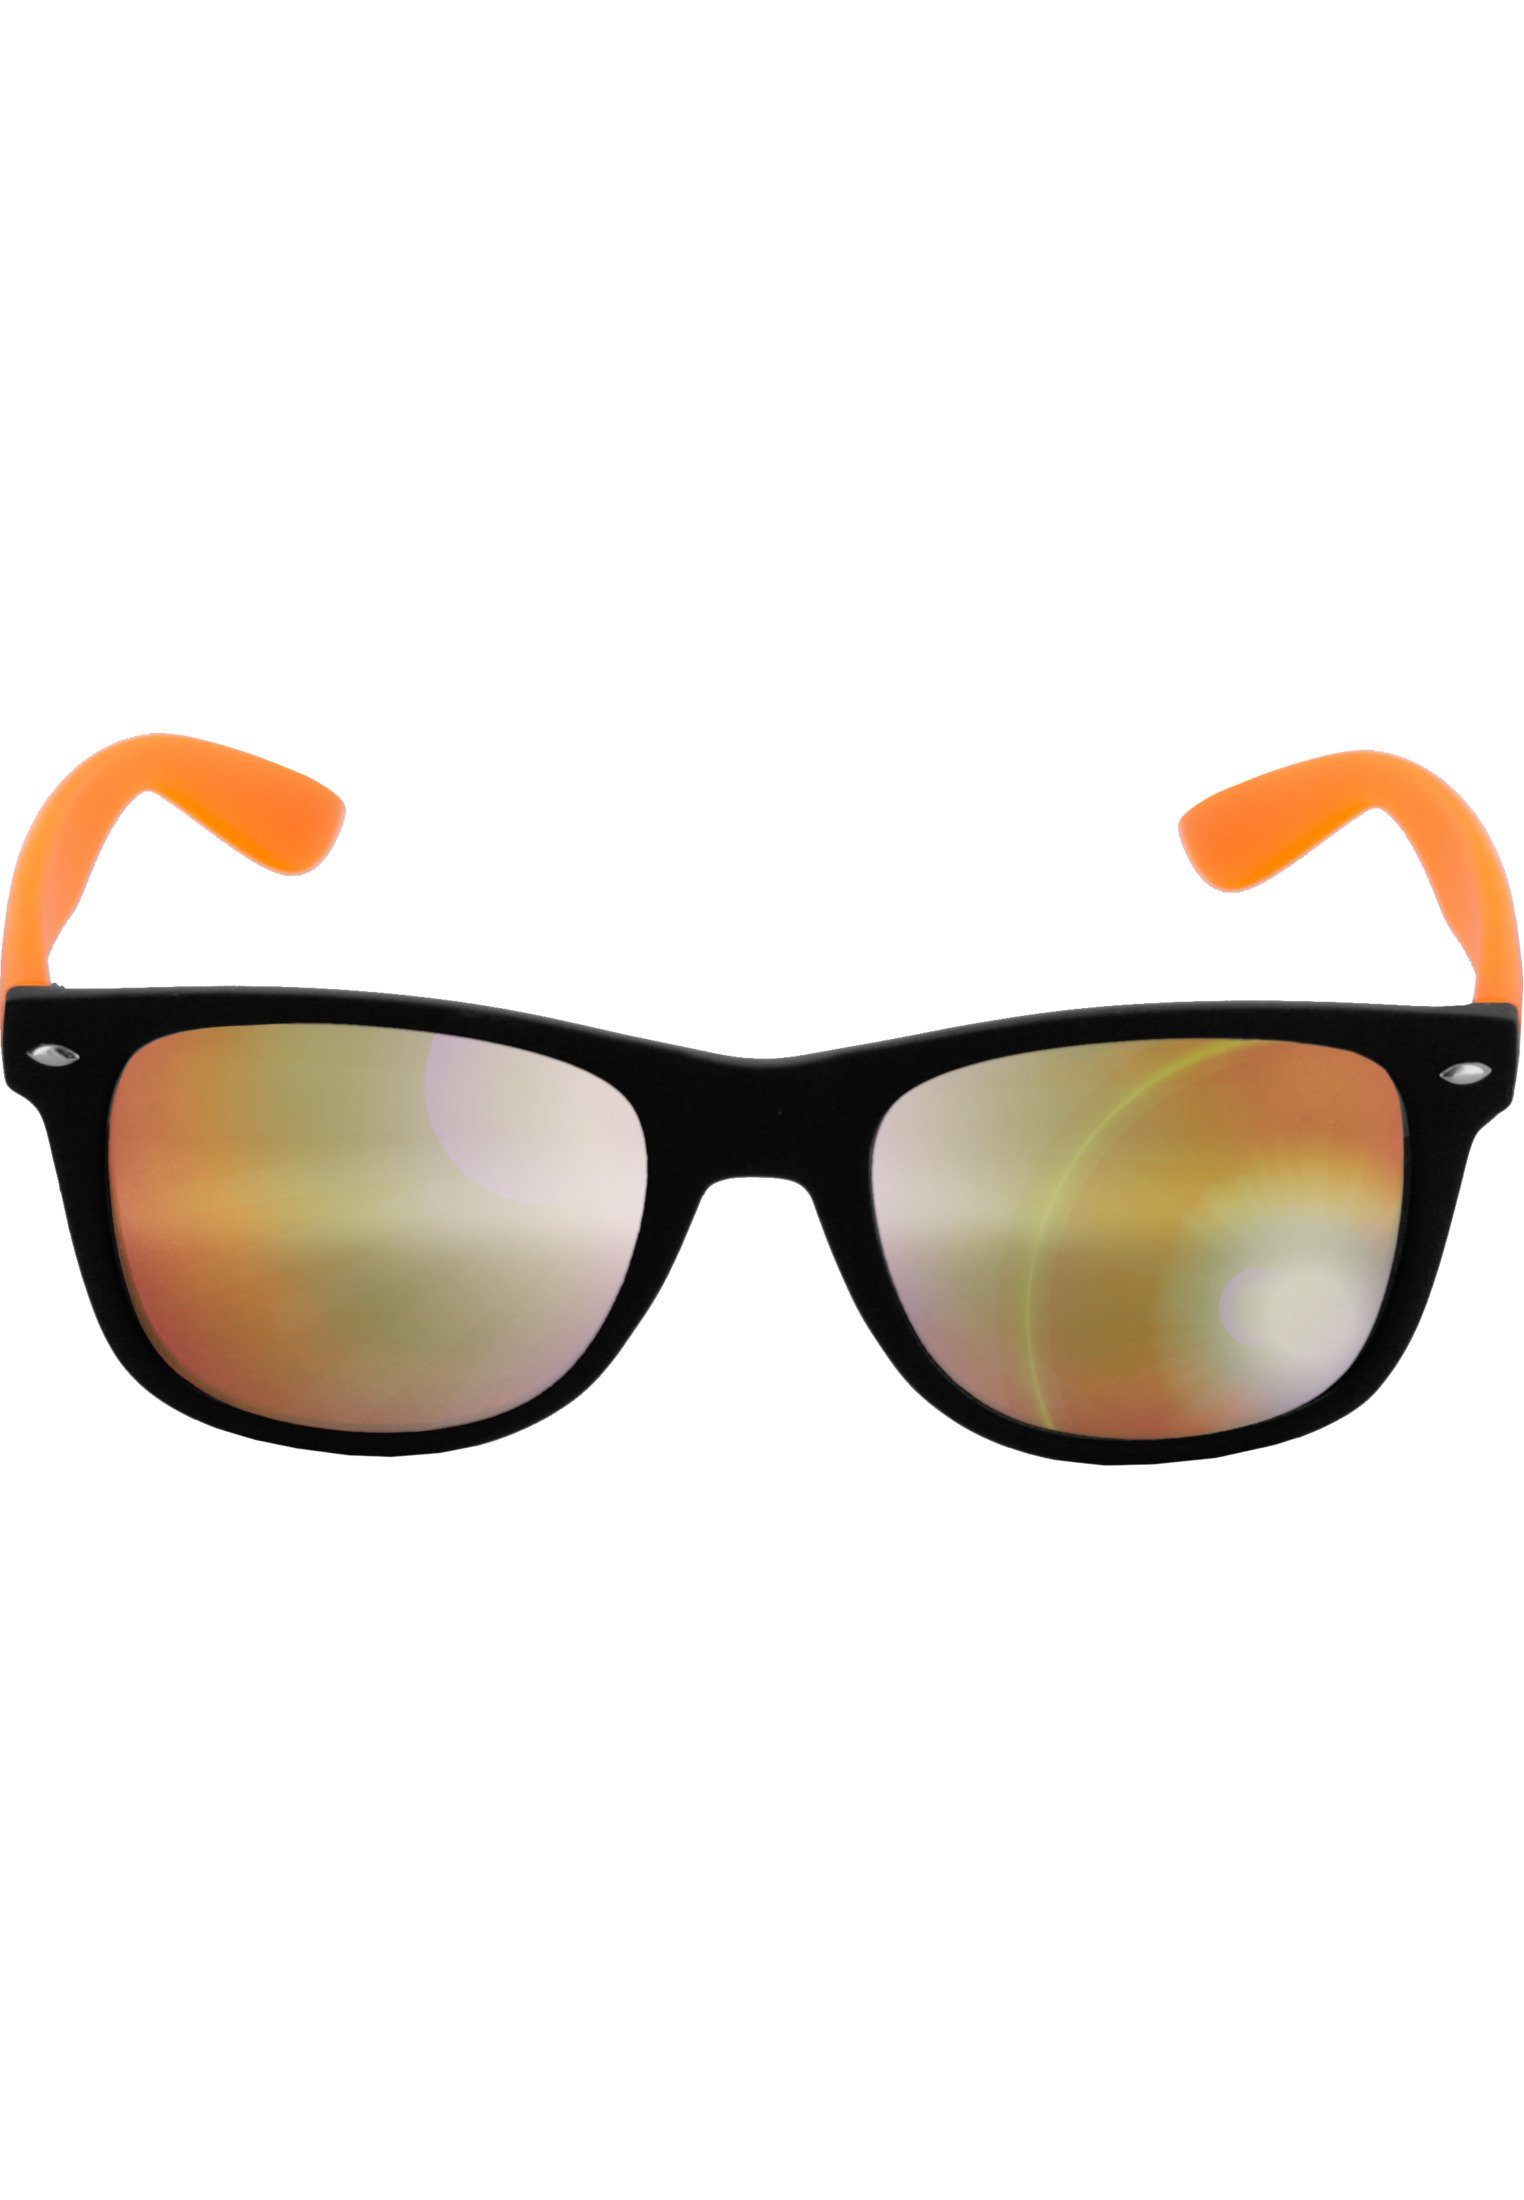 MSTRDS Sonnenbrille Accessoires Sunglasses Likoma Mirror blk/ora/ora | Sonnenbrillen